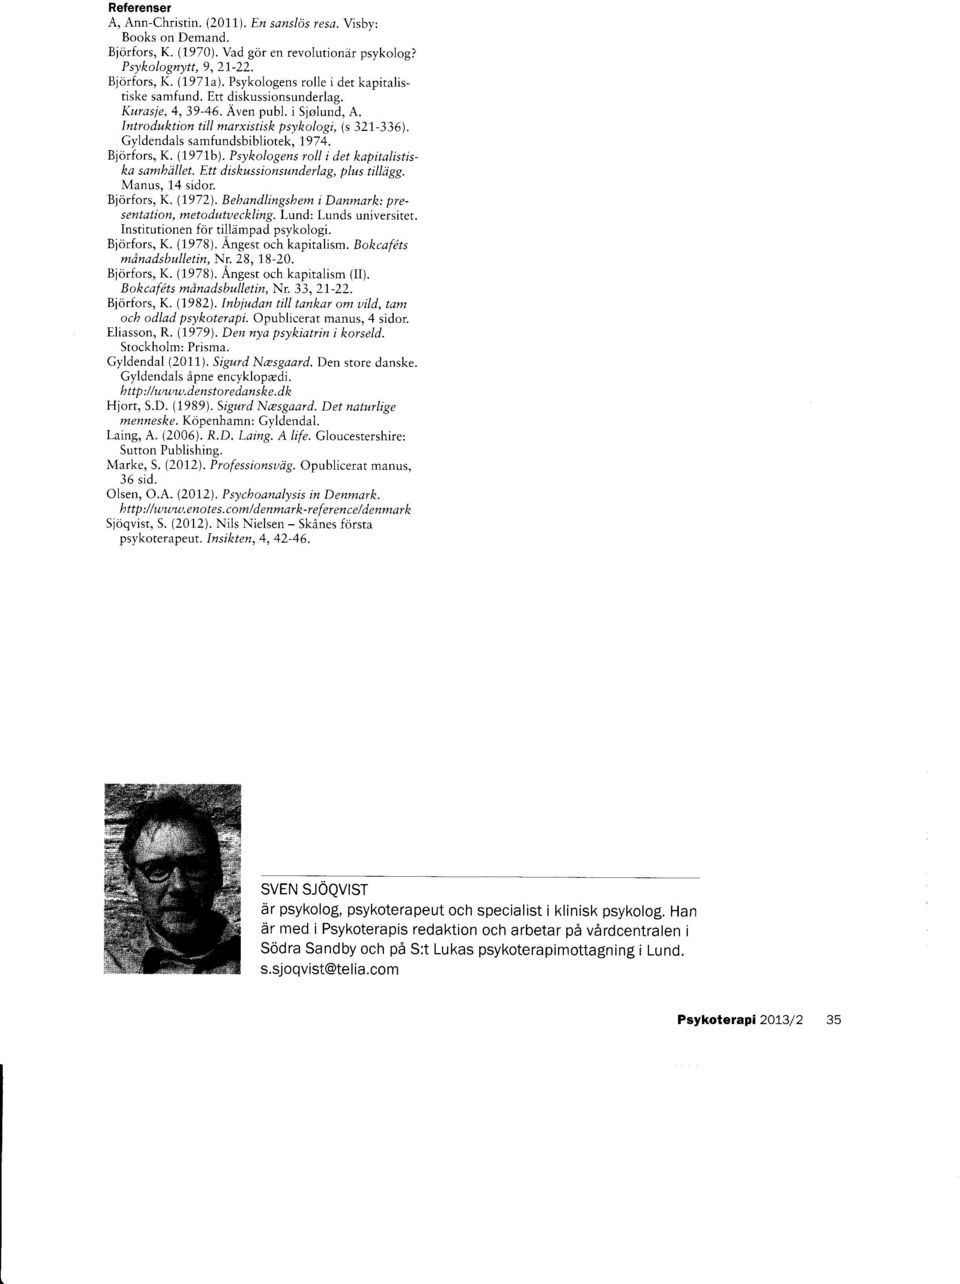 Gyldendals samfundsbibliotek, 1,97 4. Bjorfors, K. (1971b). Psykologens roll i det kapitalistiska samhallet. Ett diskussionsunderlag, plus tilliigg. Manus, [4 sidor. Bjor{ors, K. (1.972).